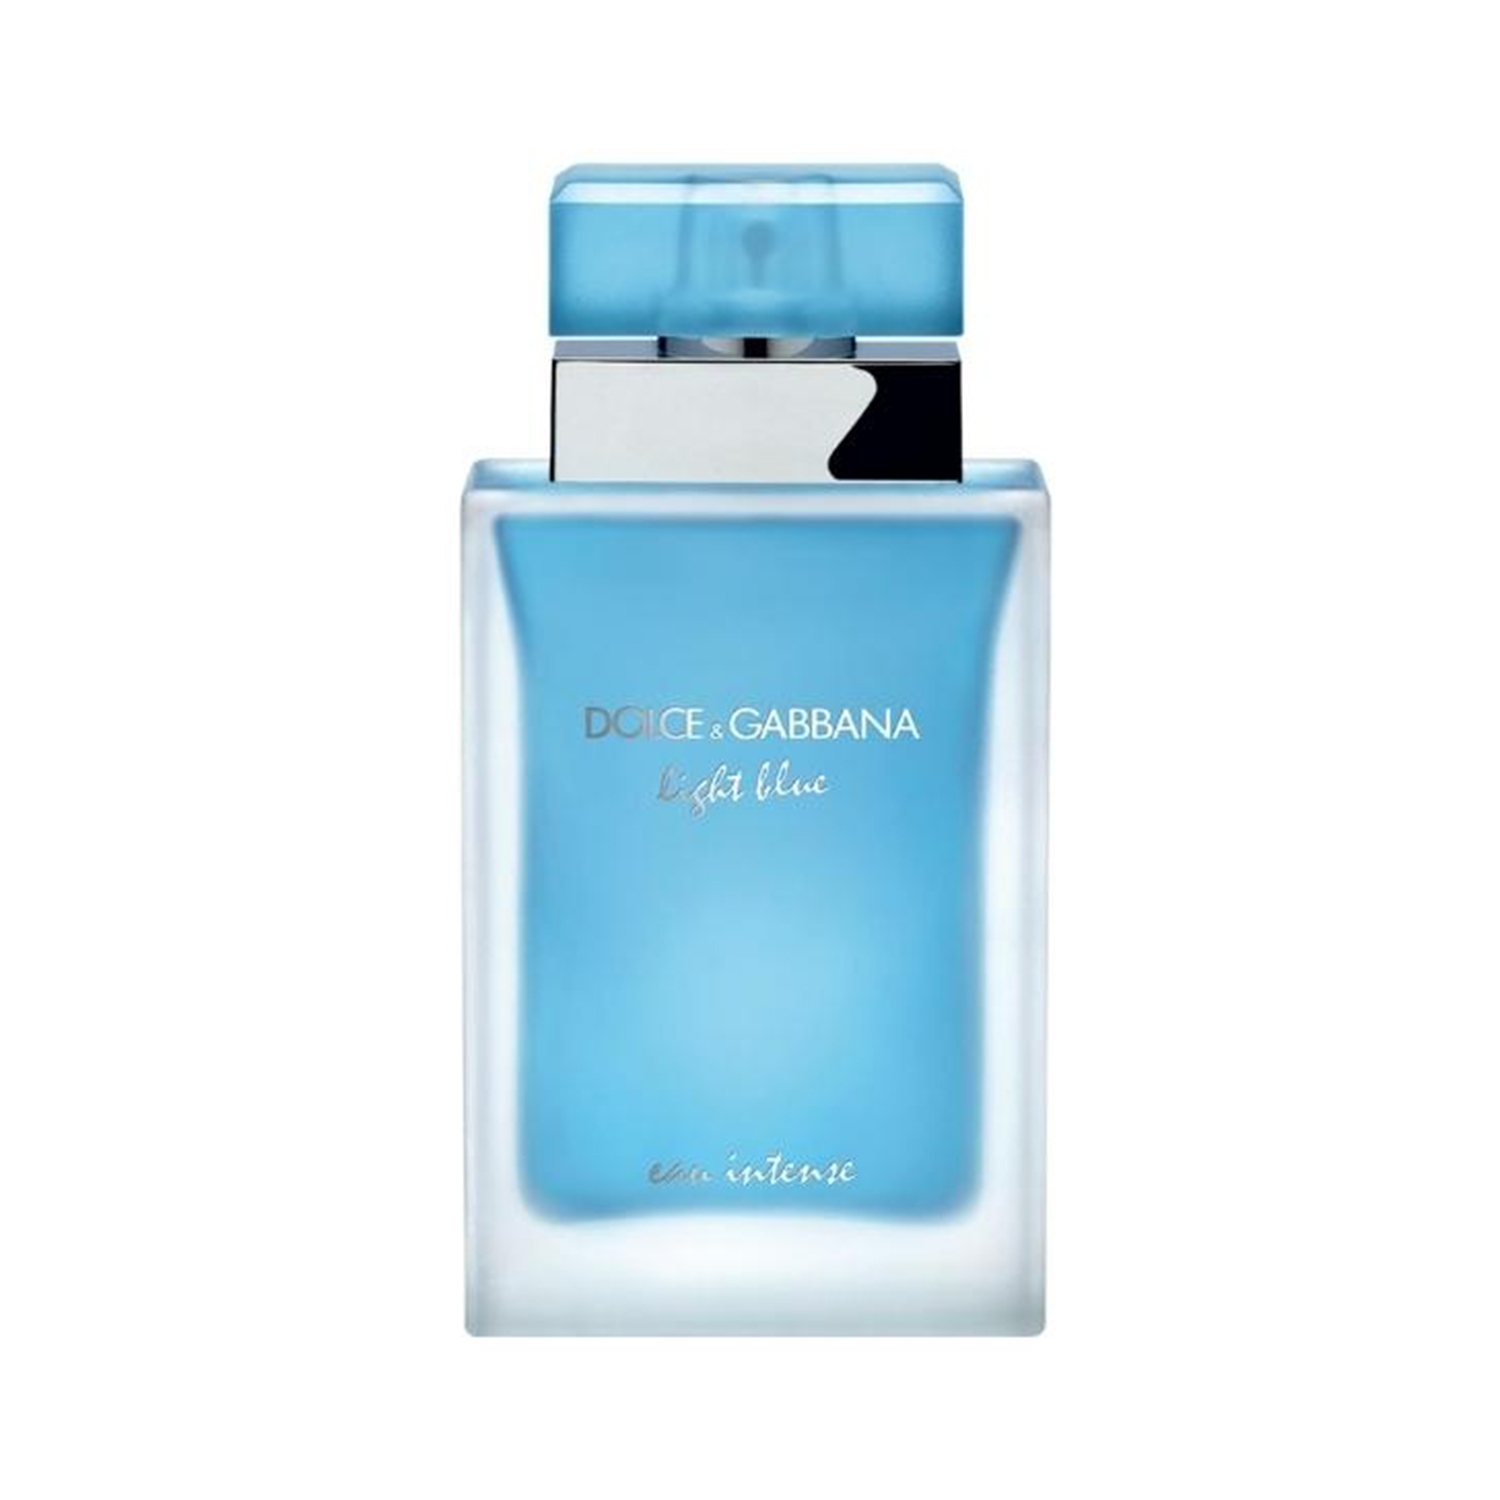 Dolce&Gabbana | Dolce&Gabbana Light Blue Eau Intense EDP (50ml)